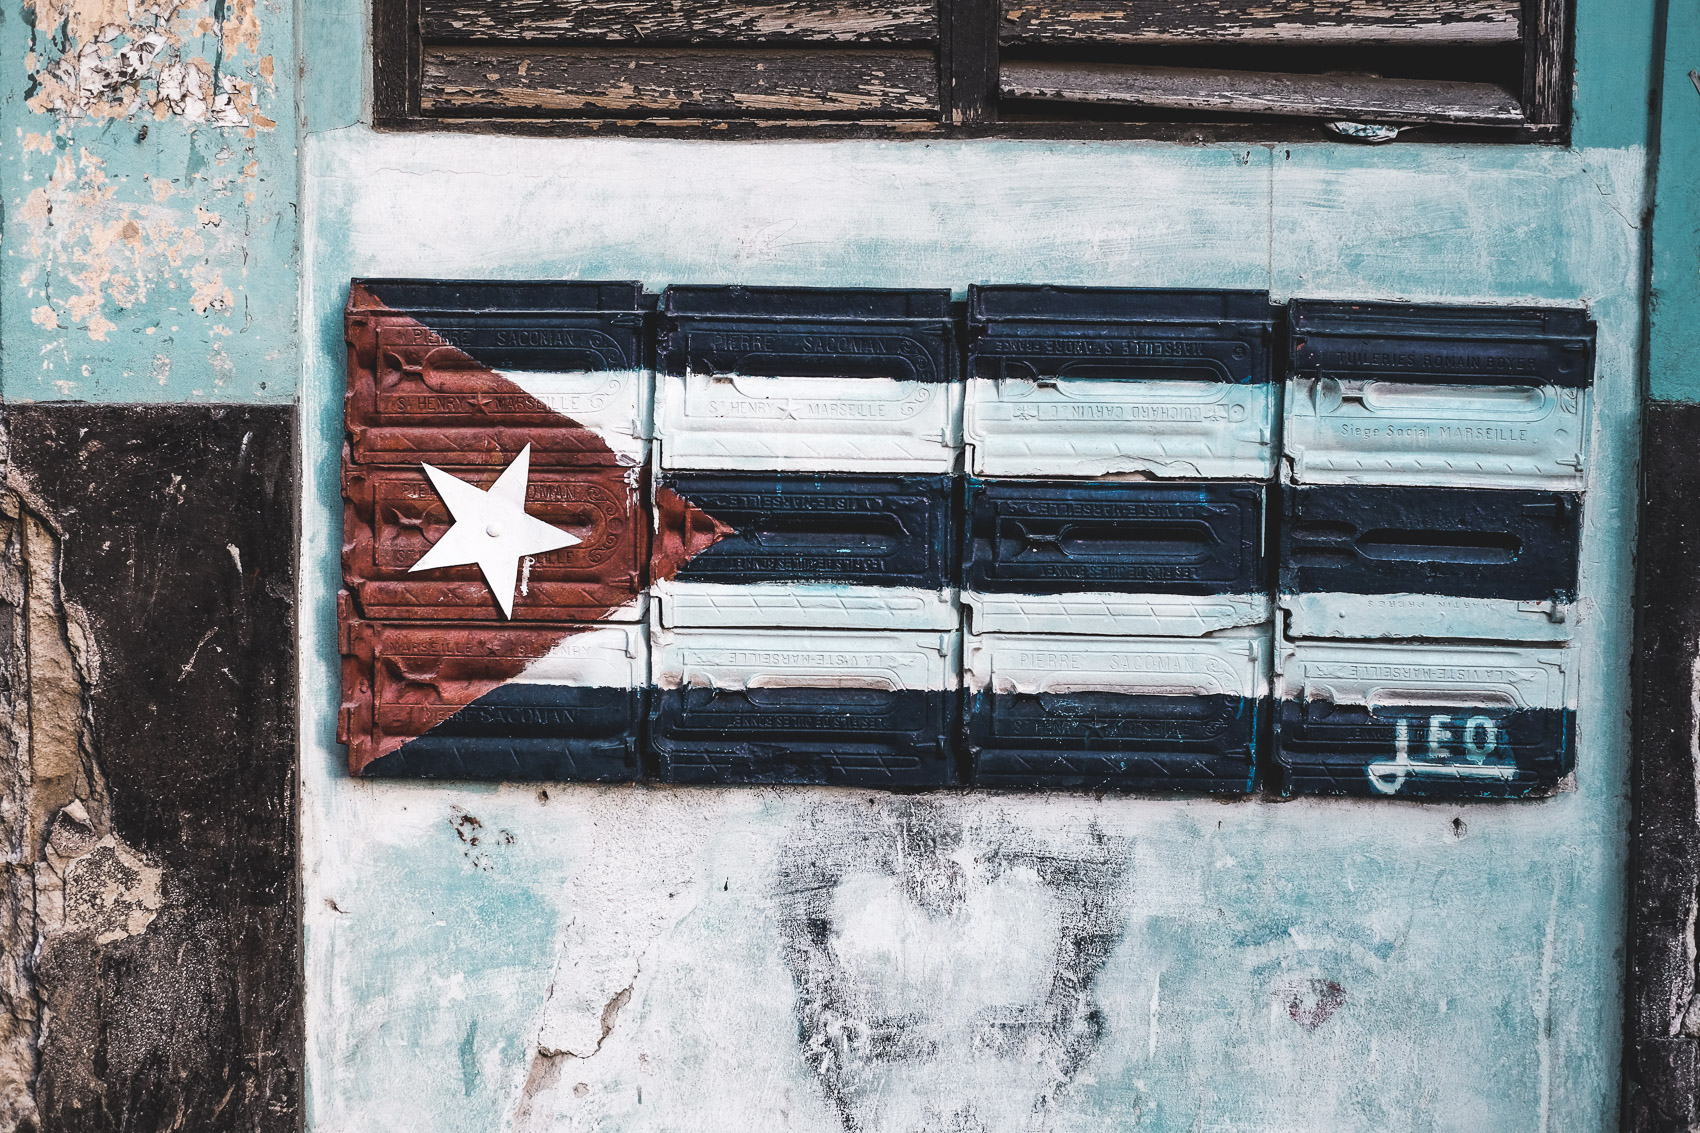 Cuba by Jesse Abrams Photography